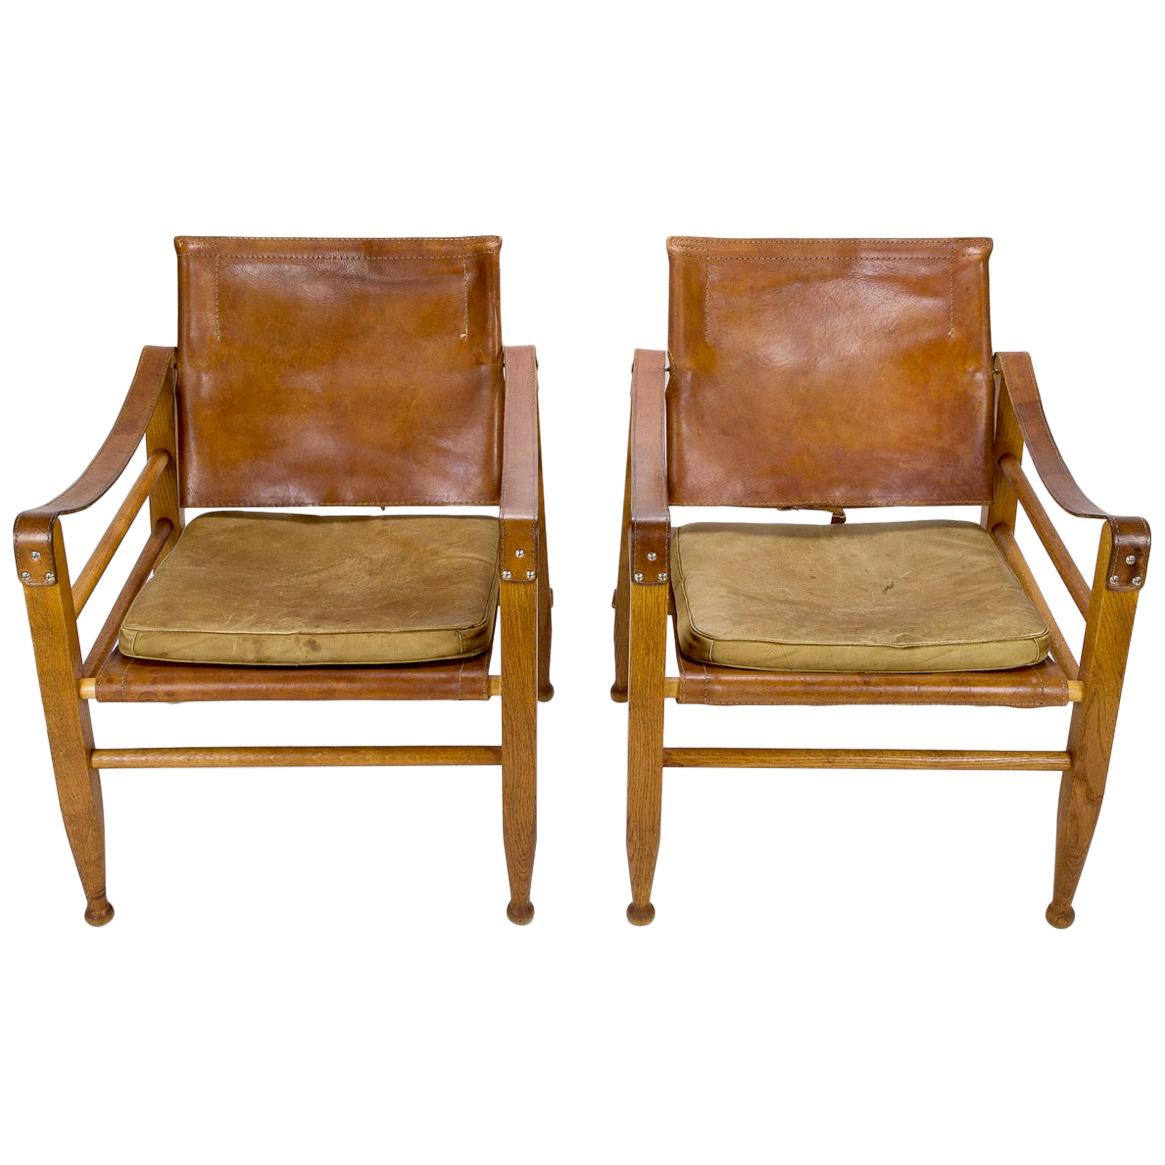 Pair of Midcentury Aage Bruun Safari Chairs, Denmark, 1960s